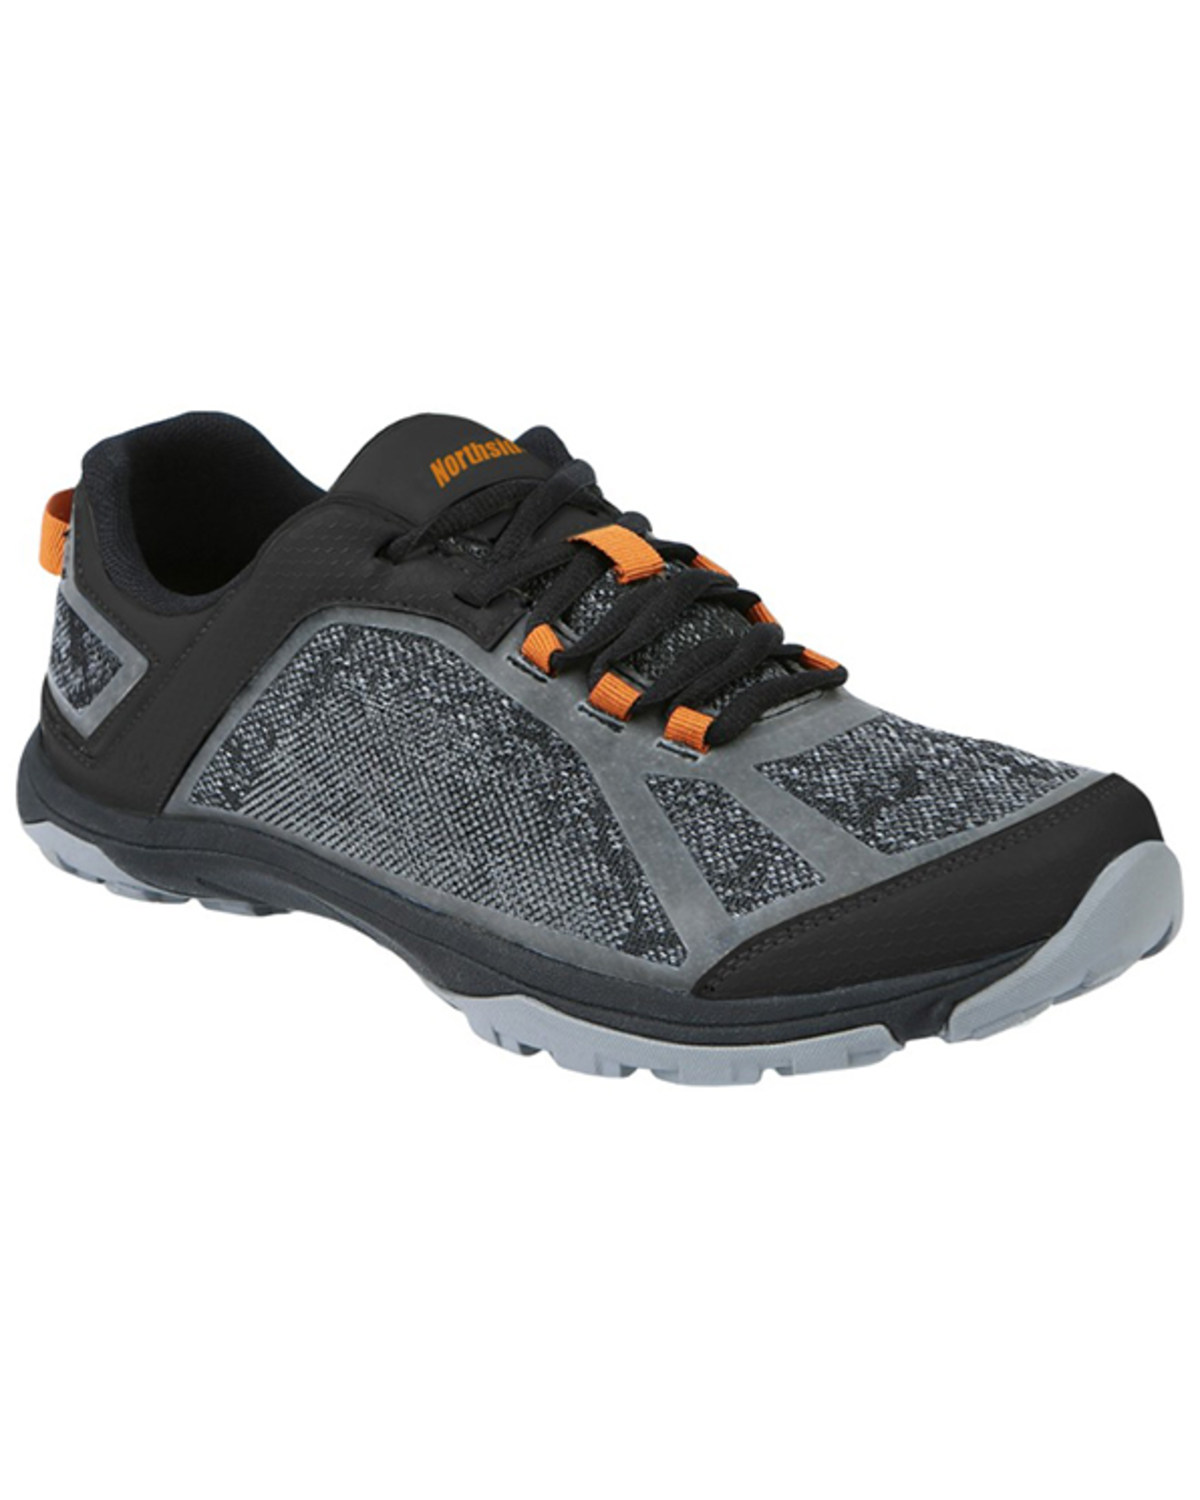 Northside Men's Belmont Trek Lace-Up Athletic Hiking Shoes